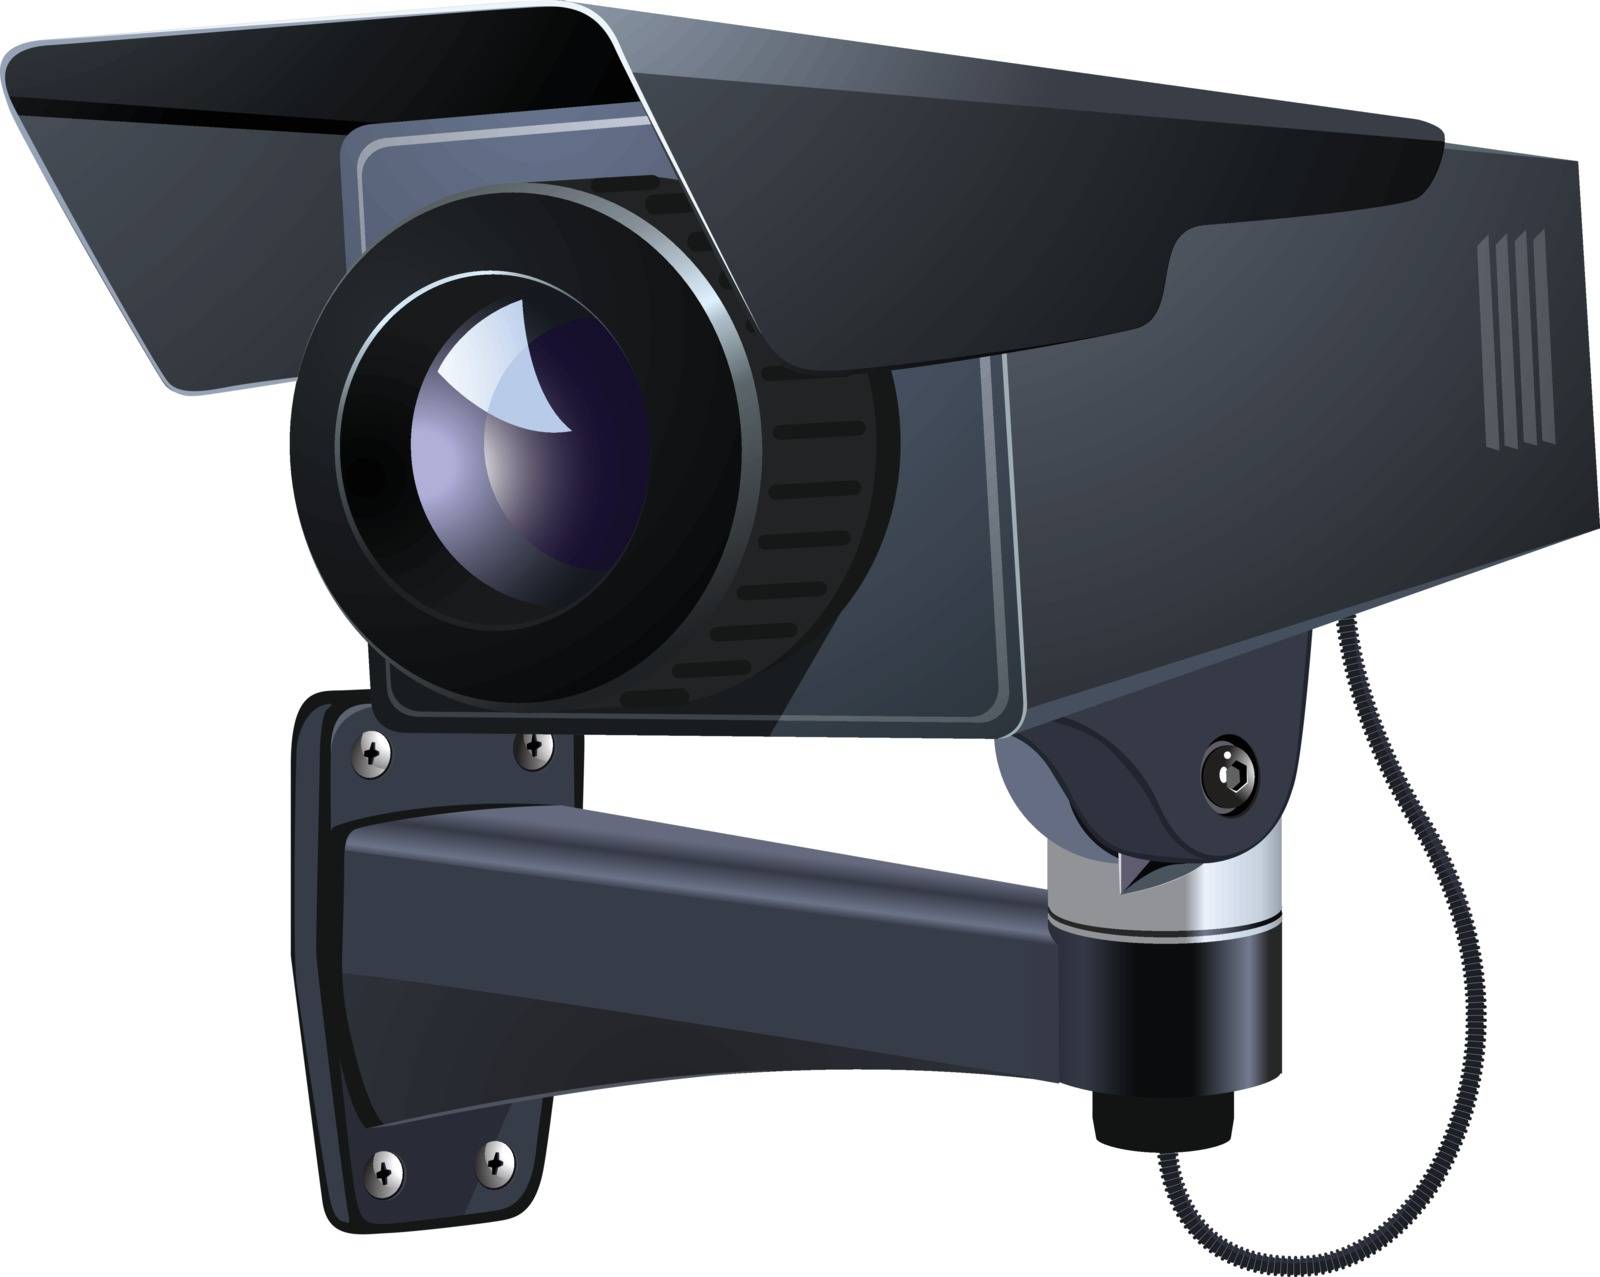 CCTV vector illustration by ayax